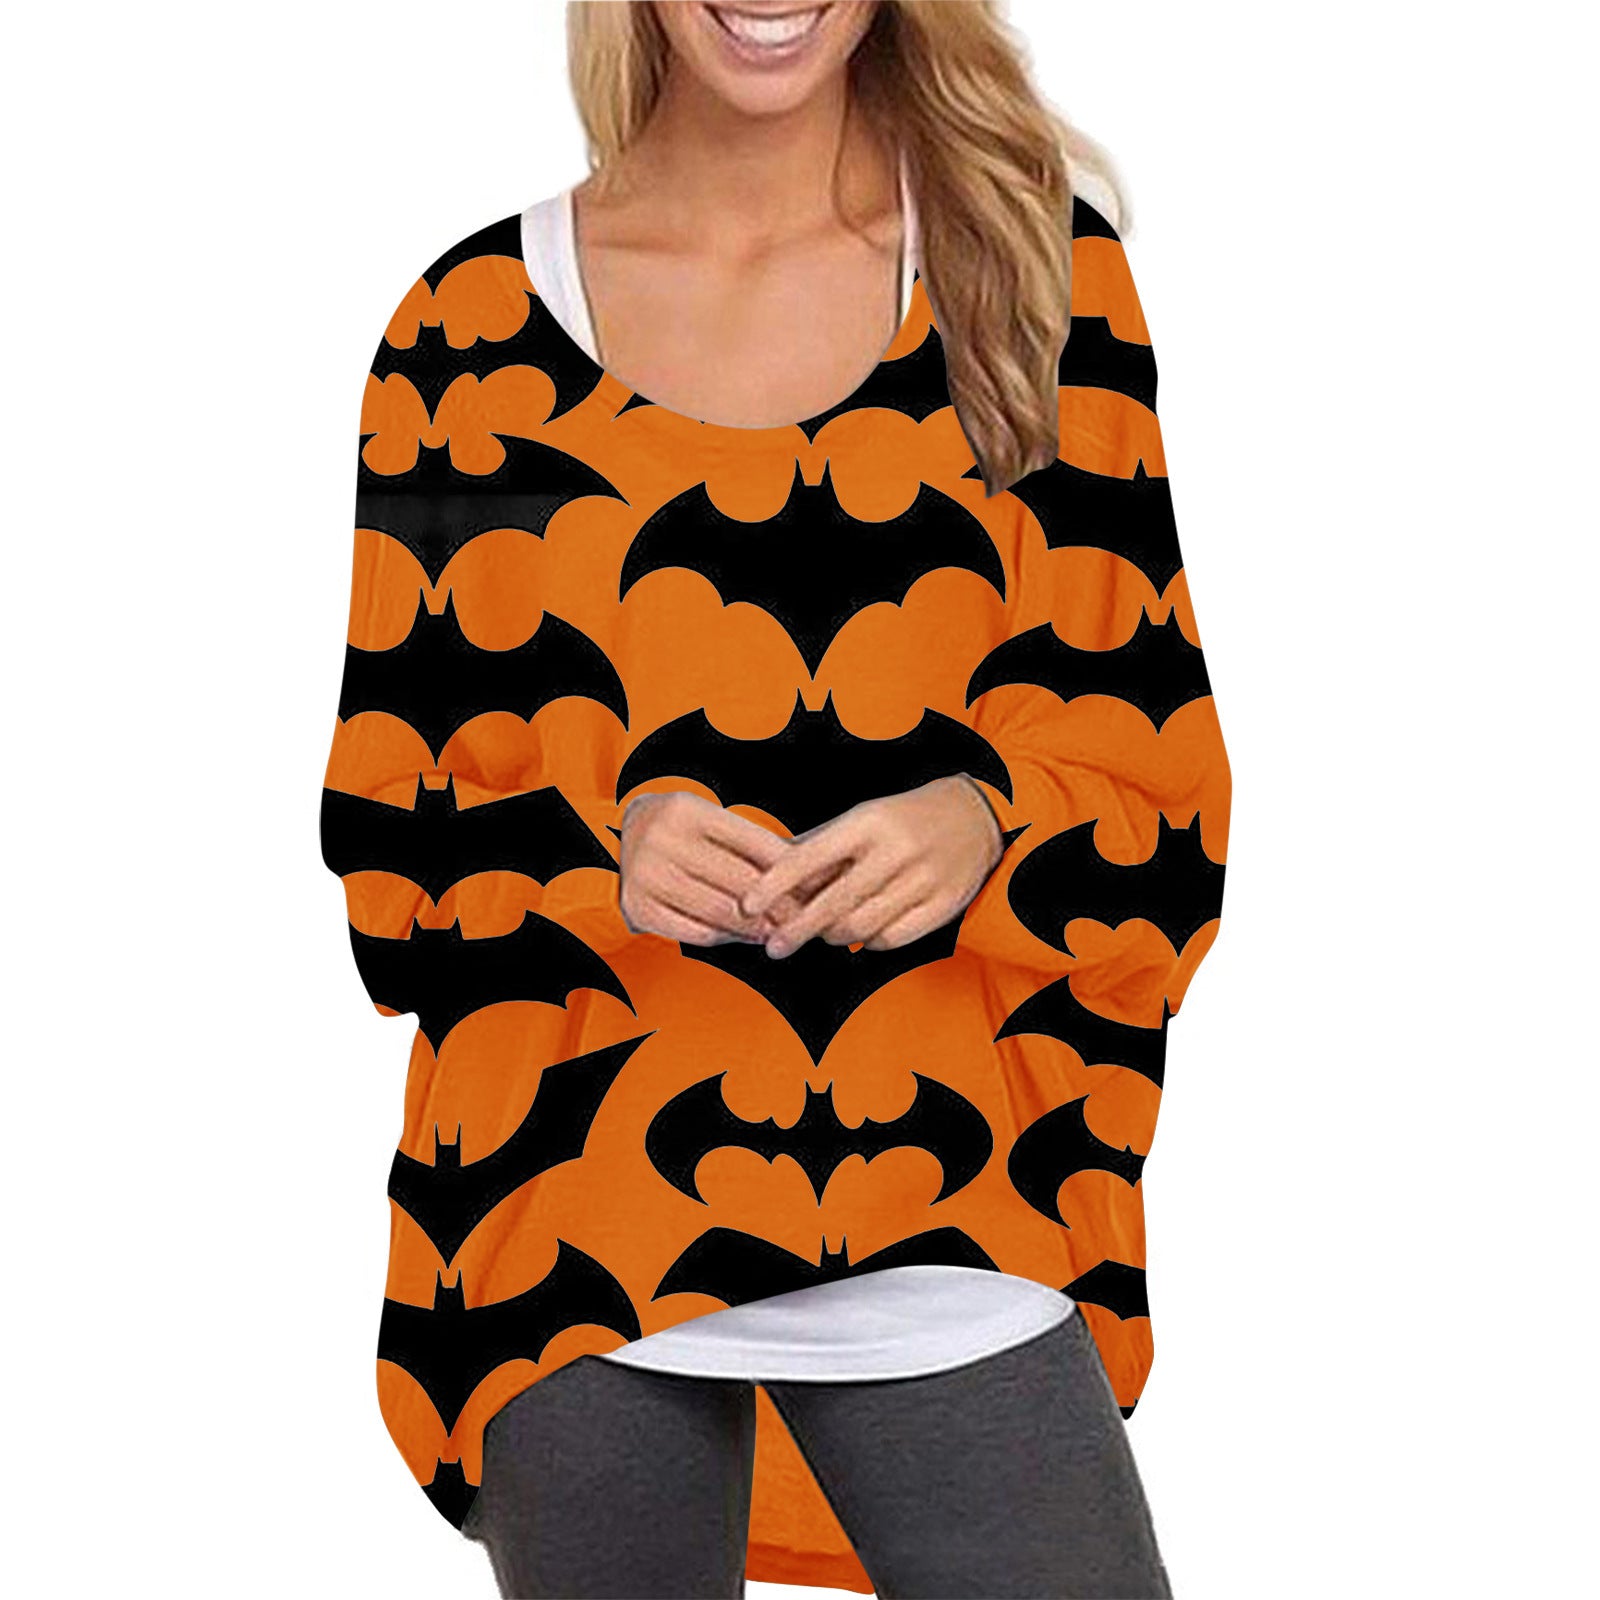 Women Halloween Pumpkin Print Long Sleeves Tops-For Halloween-Free Shipping at meselling99